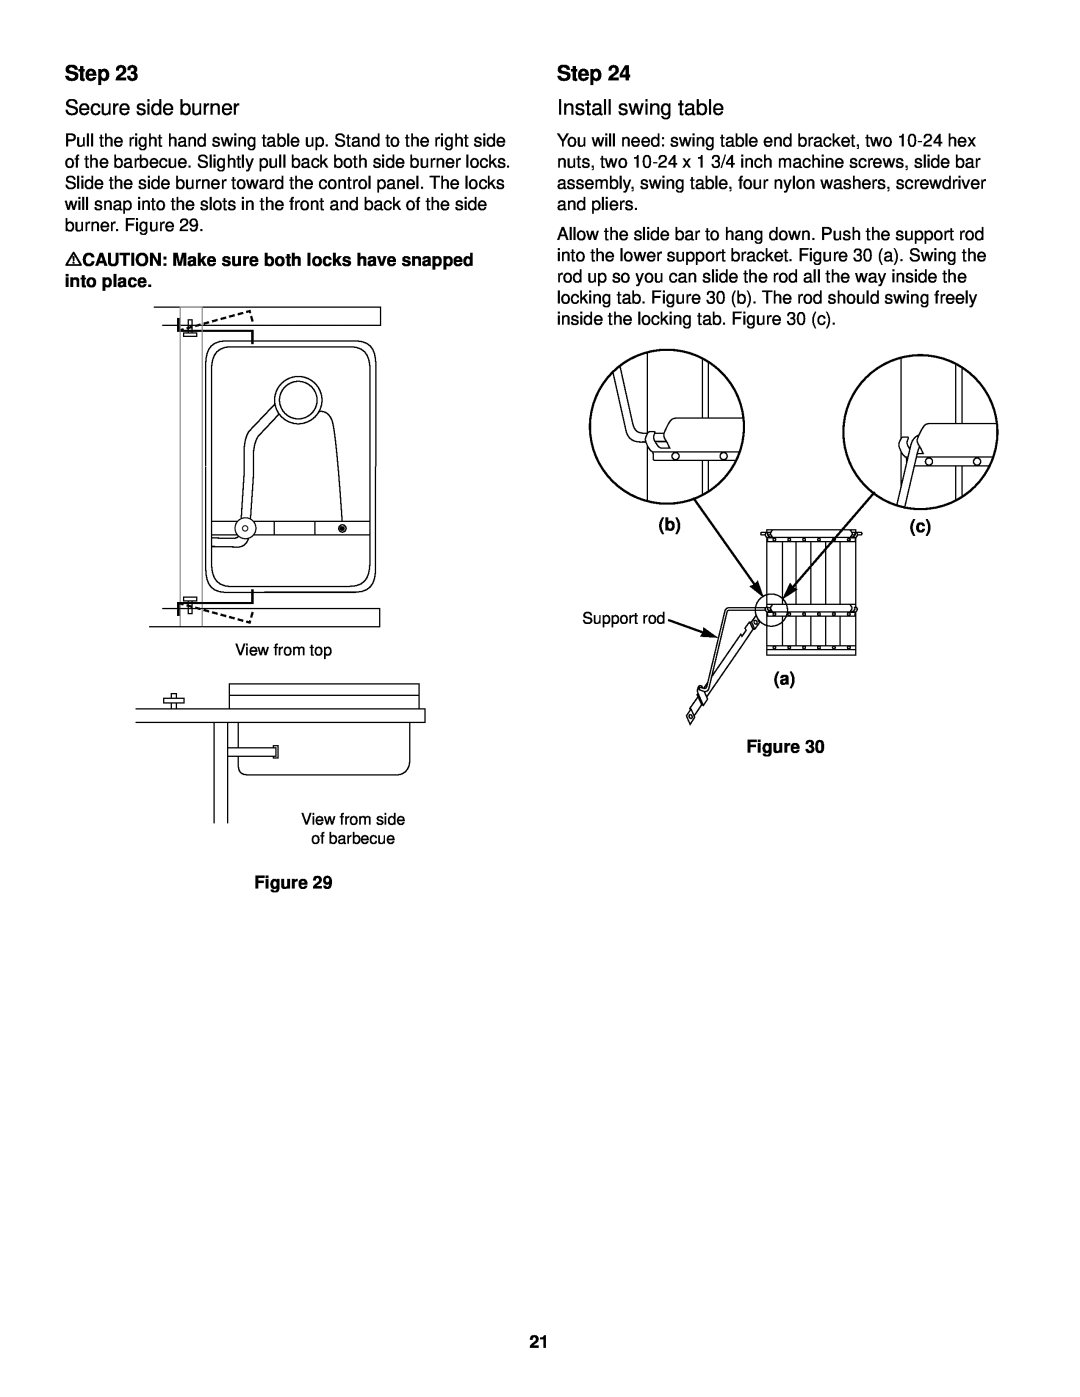 Weber 3000 LX owner manual Step, Secure side burner, Install swing table, a Figure 